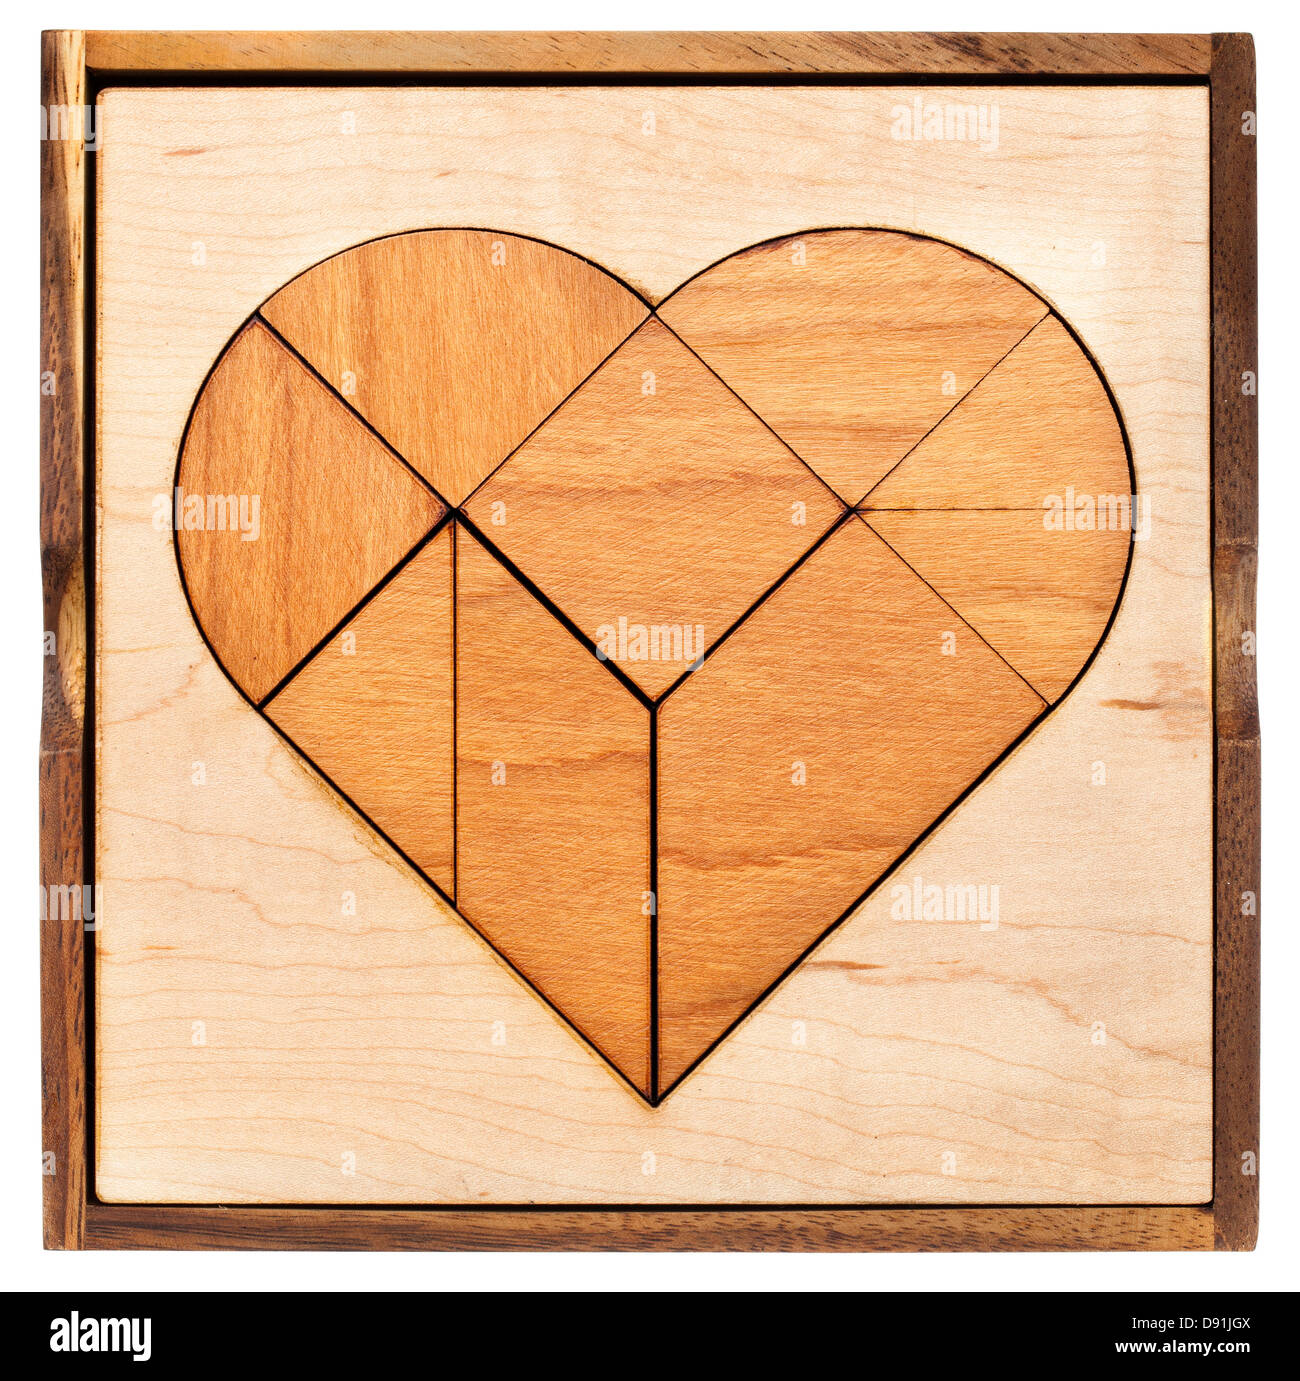 Corazón versión de tangram, un juego de rompecabezas chino tradicional hecha de diferentes piezas de madera para construir figuras abstractas de ellos Foto de stock